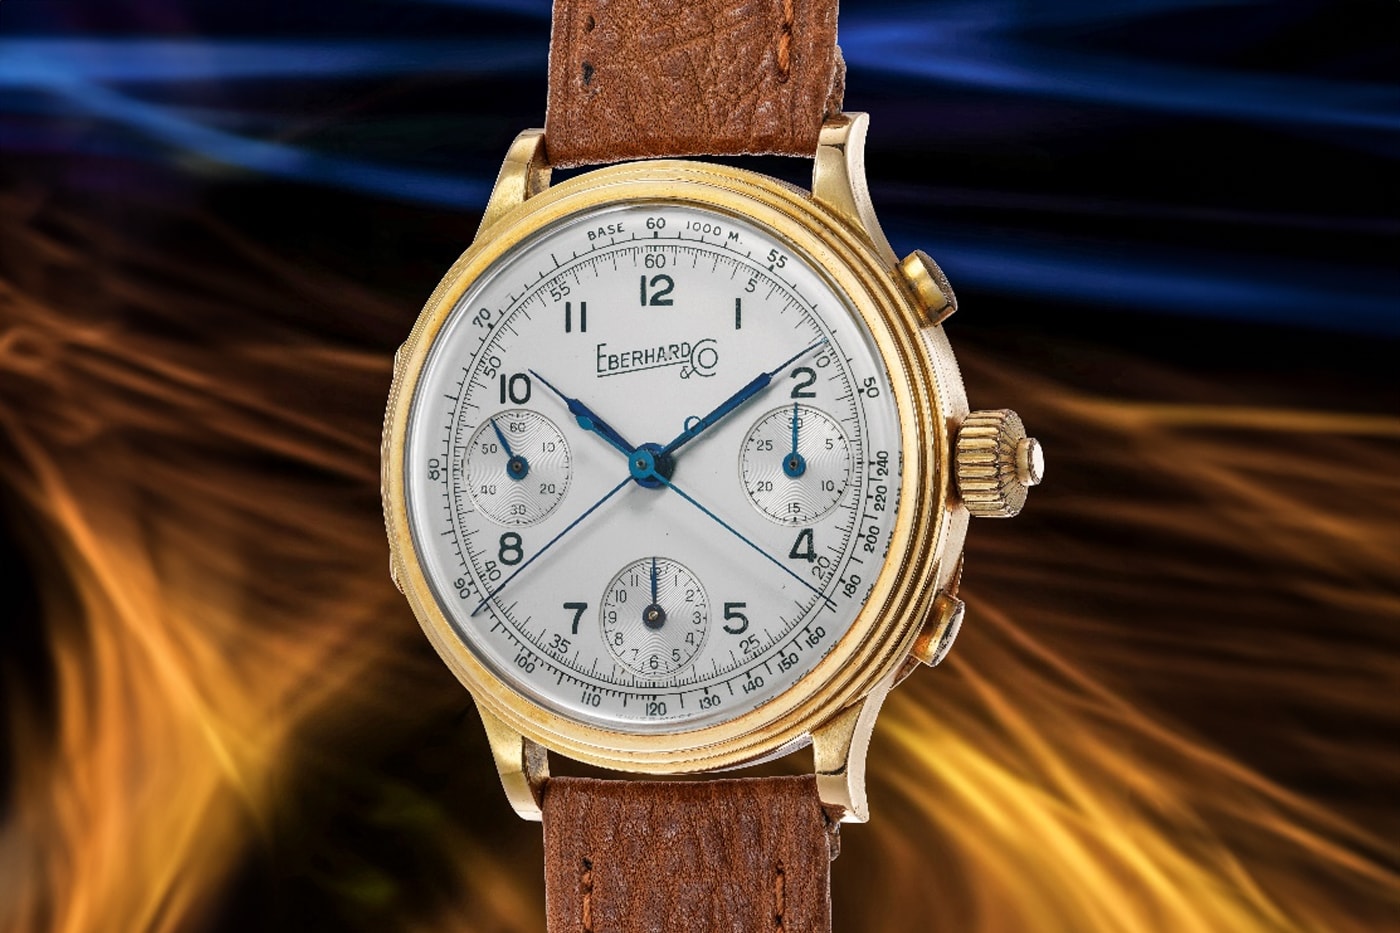 Phillips Geneva Watch Auction: XIX Guido Mondani Rolex Chronograph Ref. 6036 Jean-Claude Killy Collection Highlights 